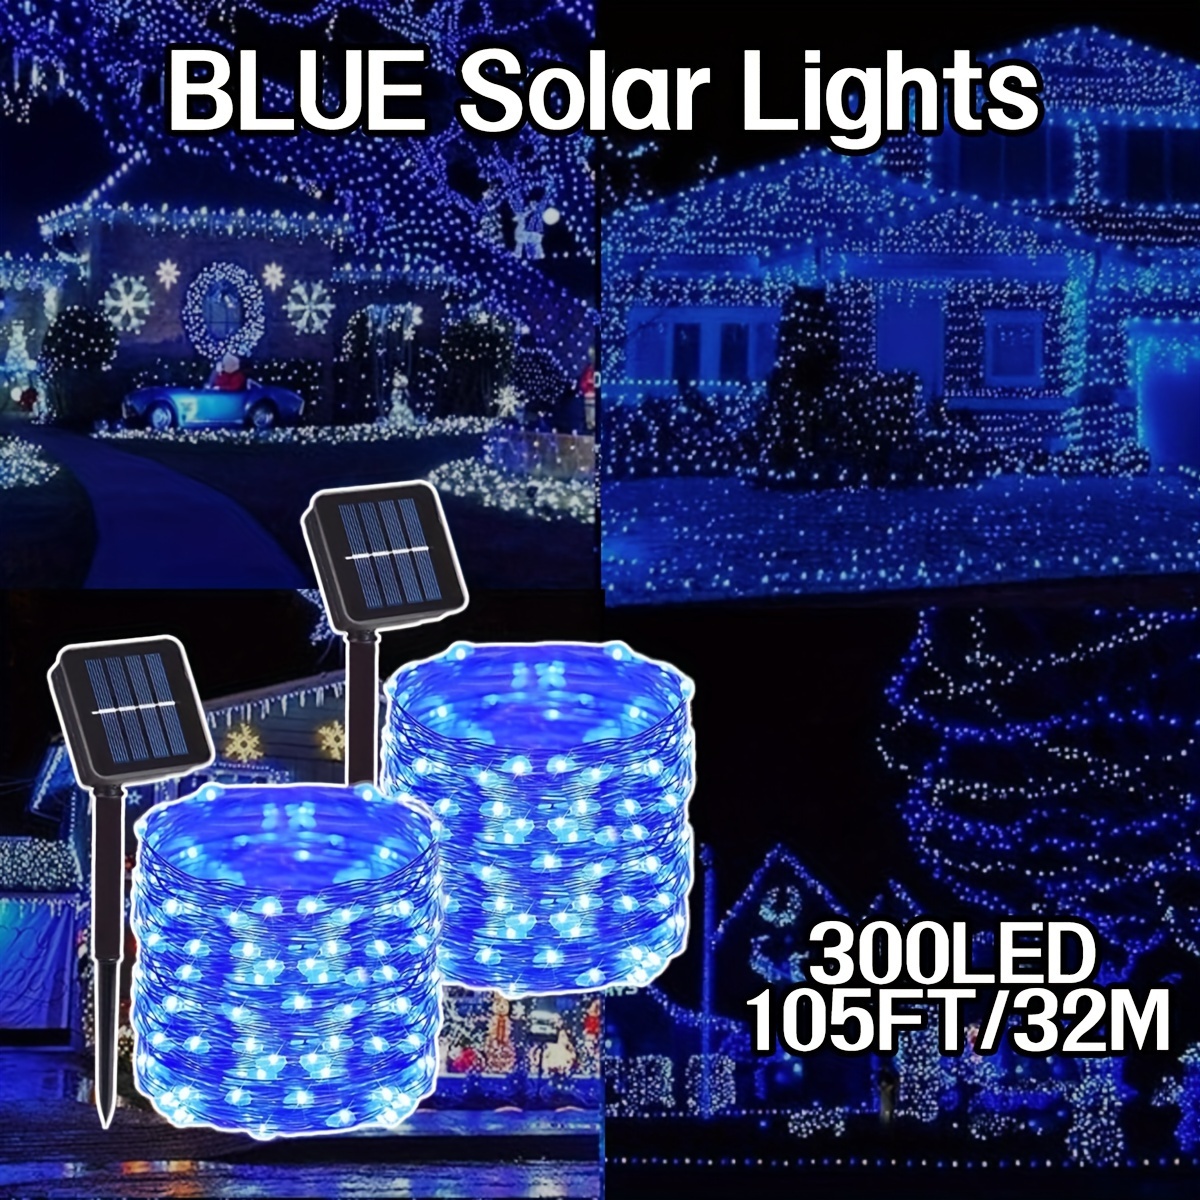 

110ft 300leds Solar Led Light Blue Outdoor Festoon Lamp Garden Fairy Lights String Waterproof Ip65 Christmas Garland Yard Decoration 23ft 50leds